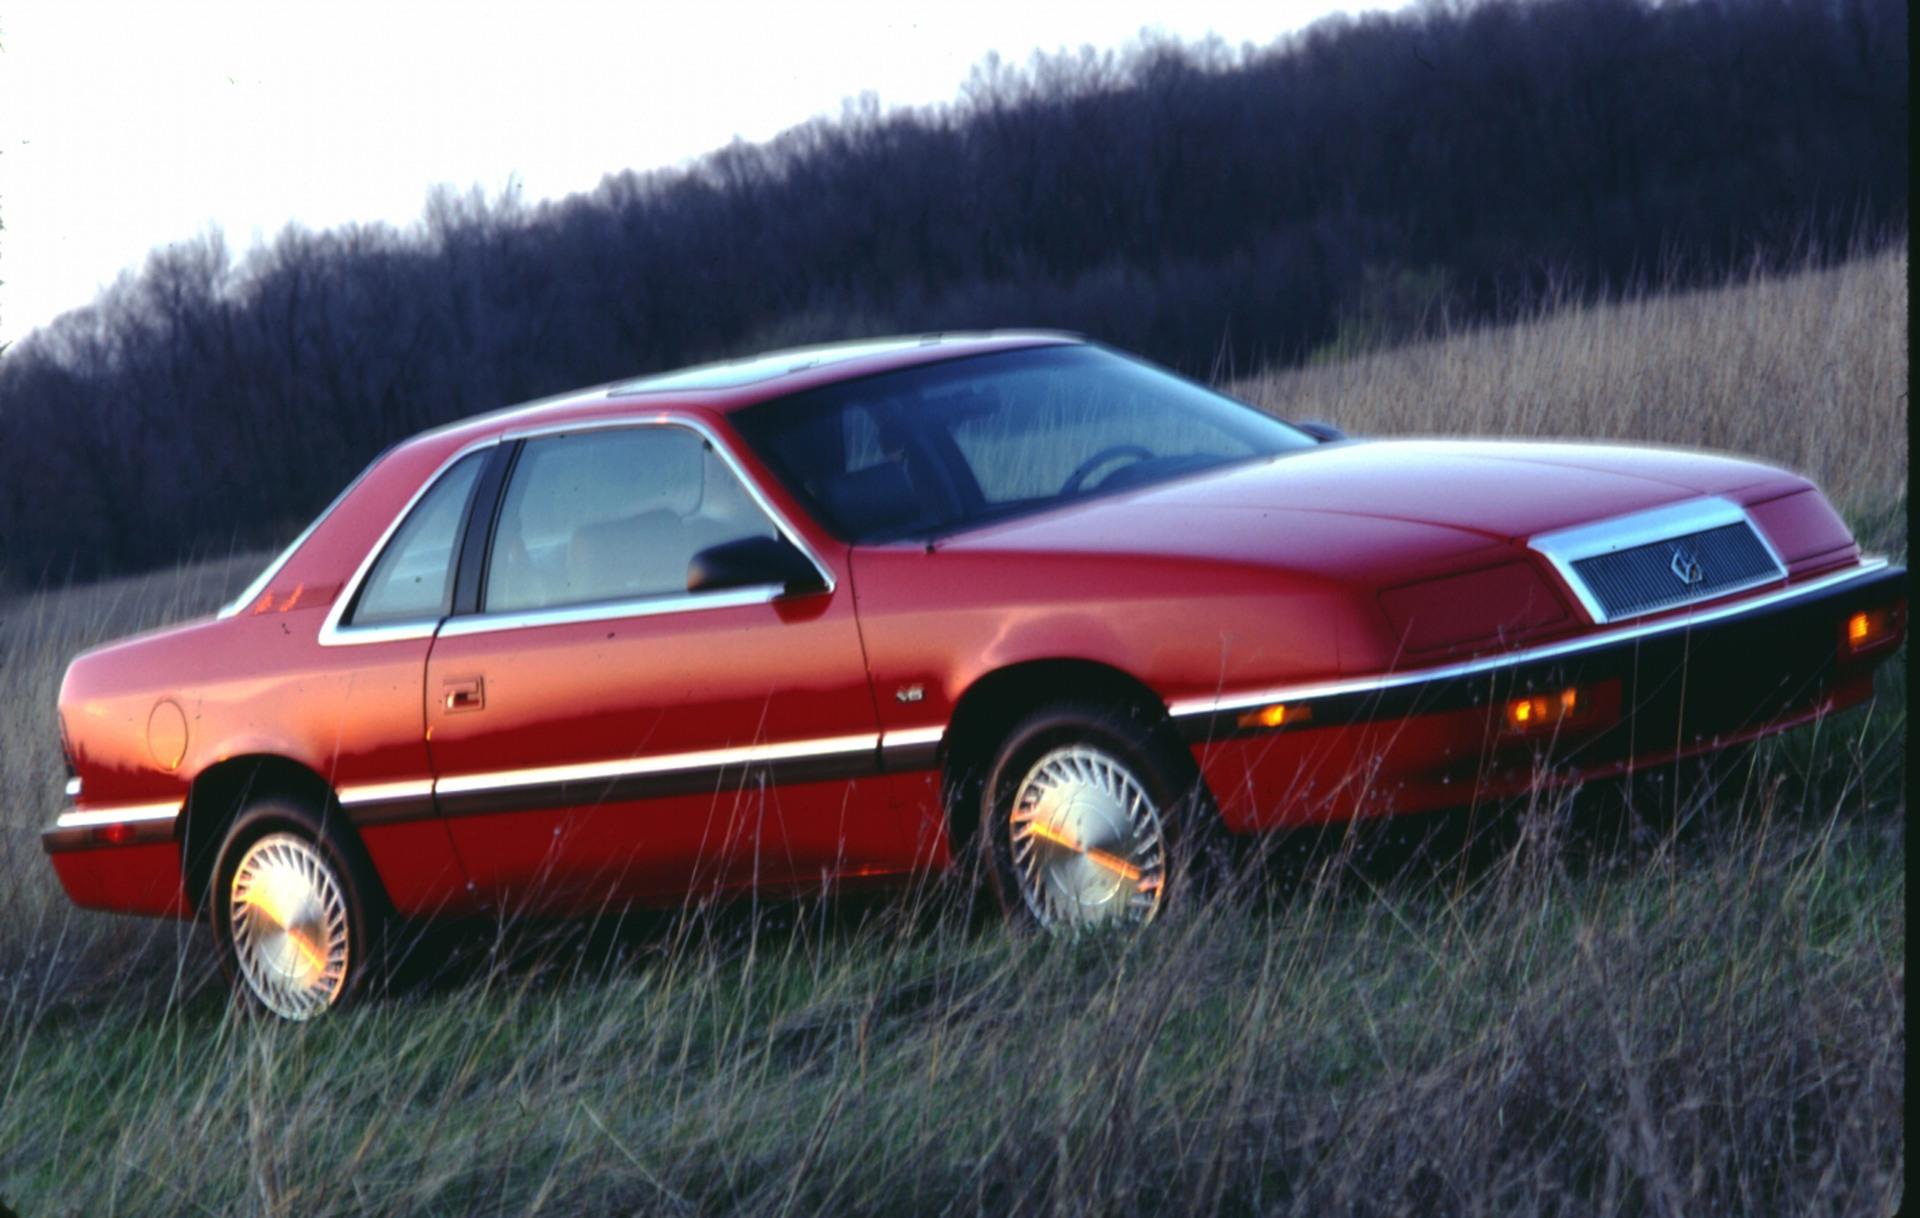 Chrysler Le Baron Coupe 2.5 I (101 Hp)